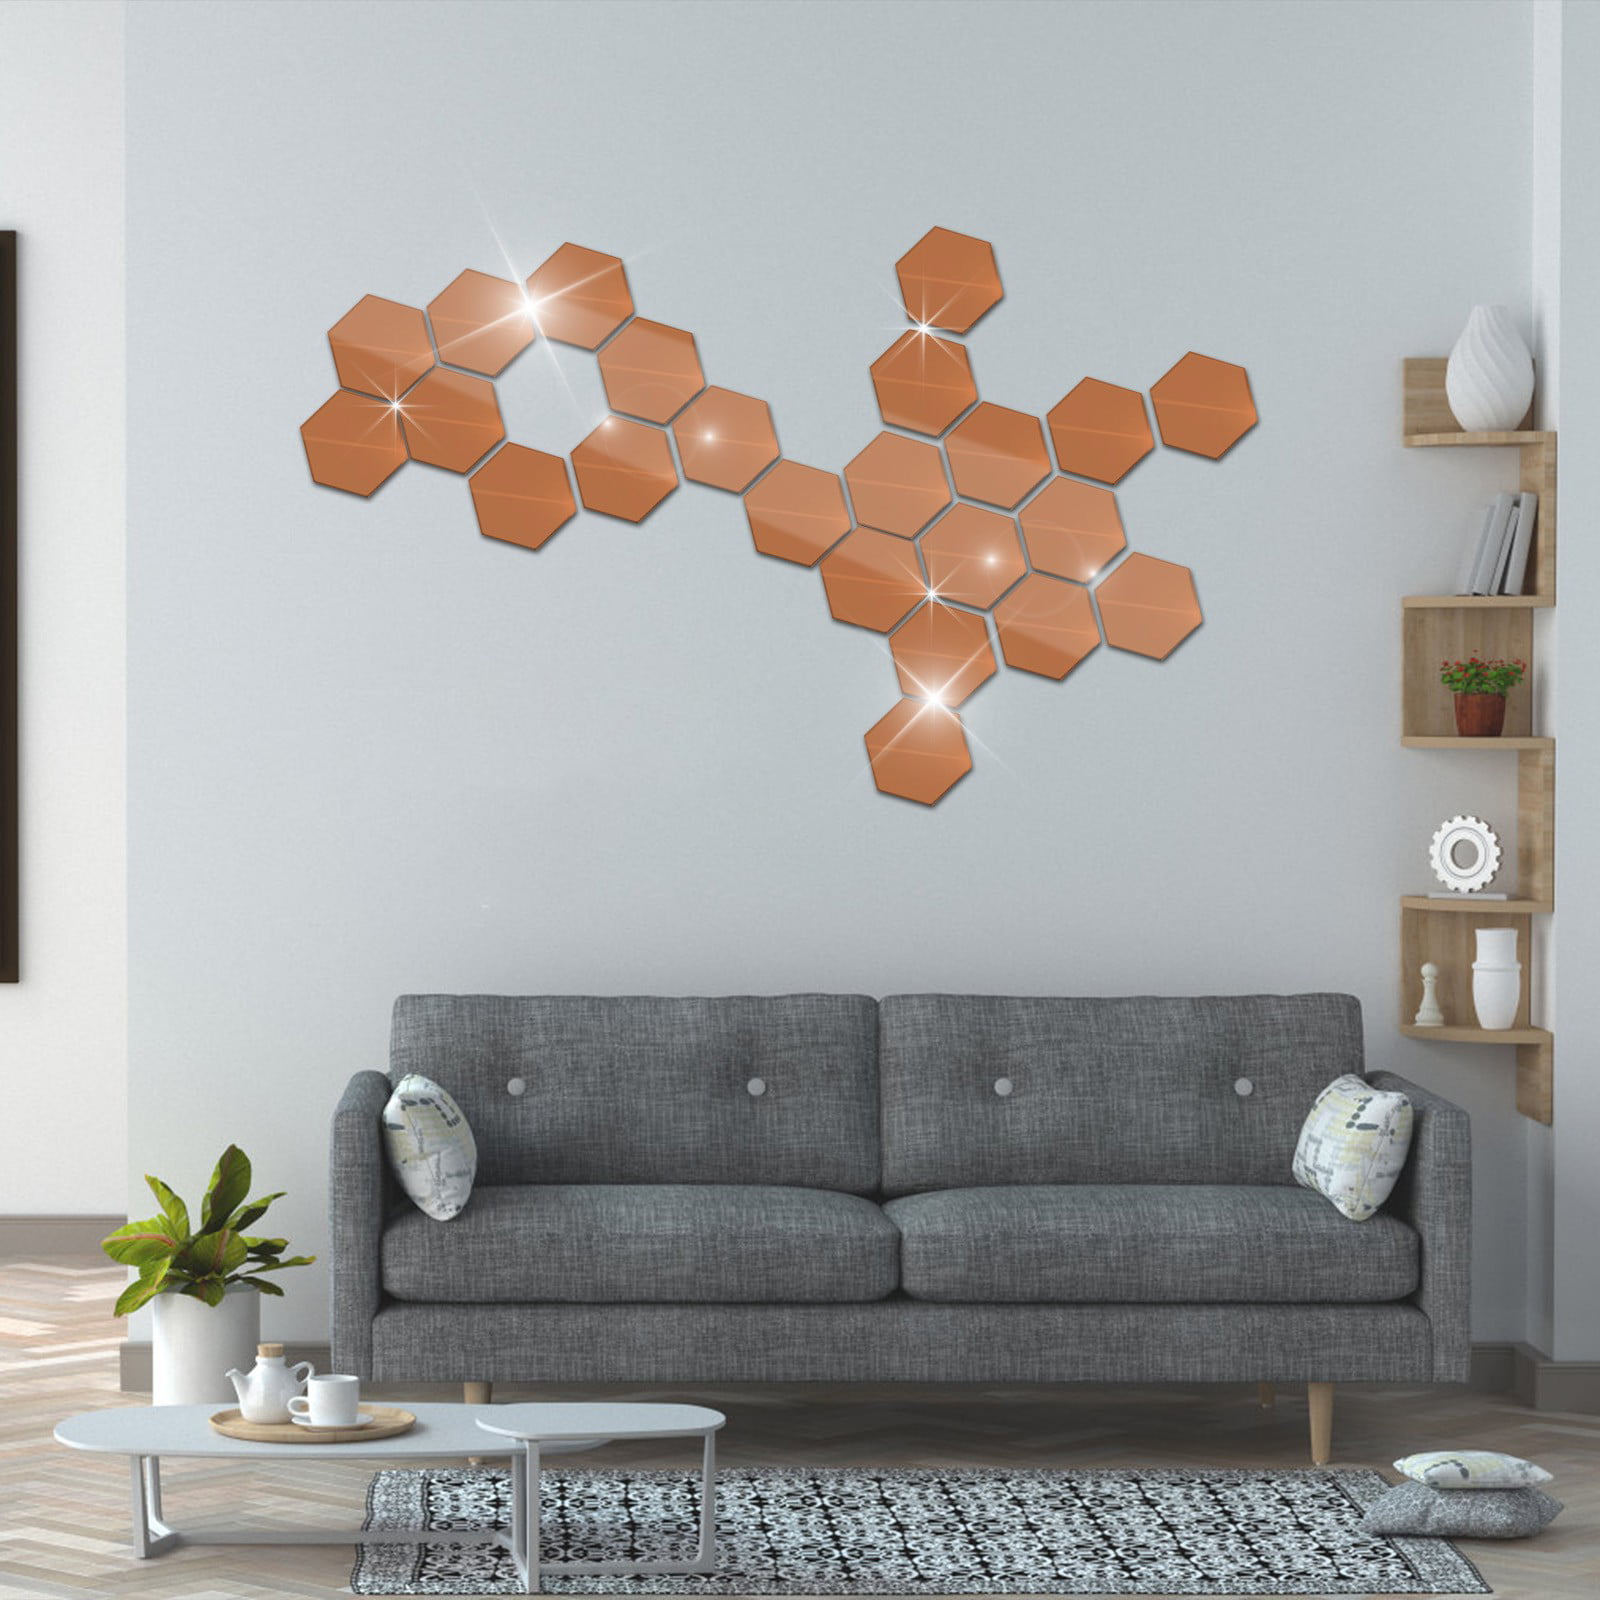 Peel Art Wall Stick Hexagon 3D Stereo And Wall MSJUHEG Home Acrylic Gold Sticker Wallpaper Mirror Adhesive Decor With Decor Diy Wall